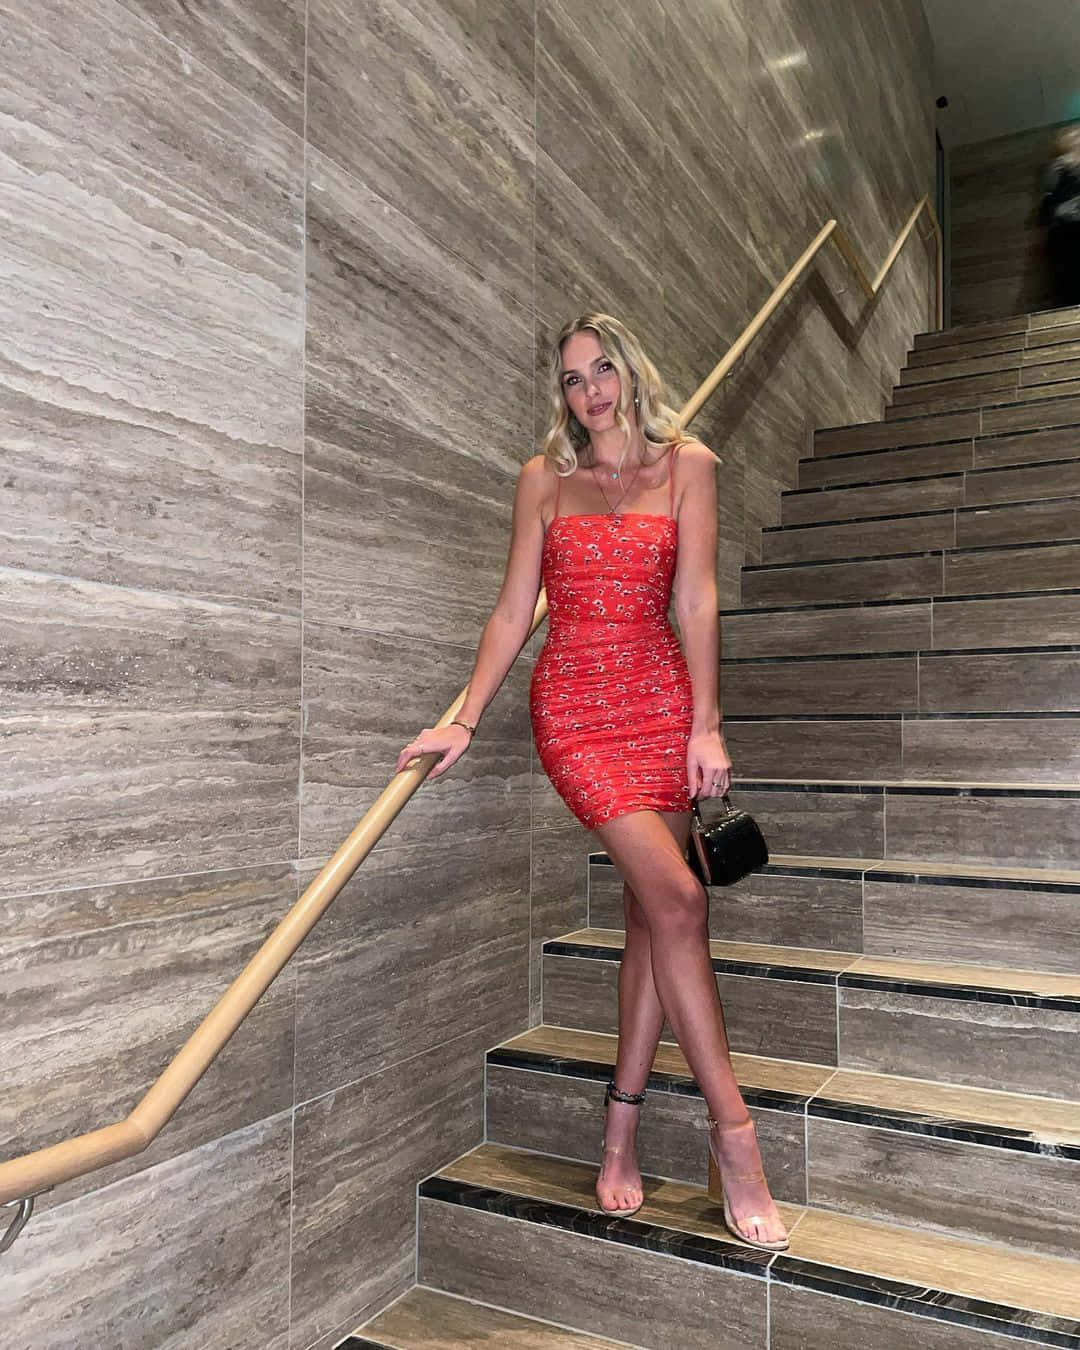 Elegant Red Dress Staircase Pose Wallpaper